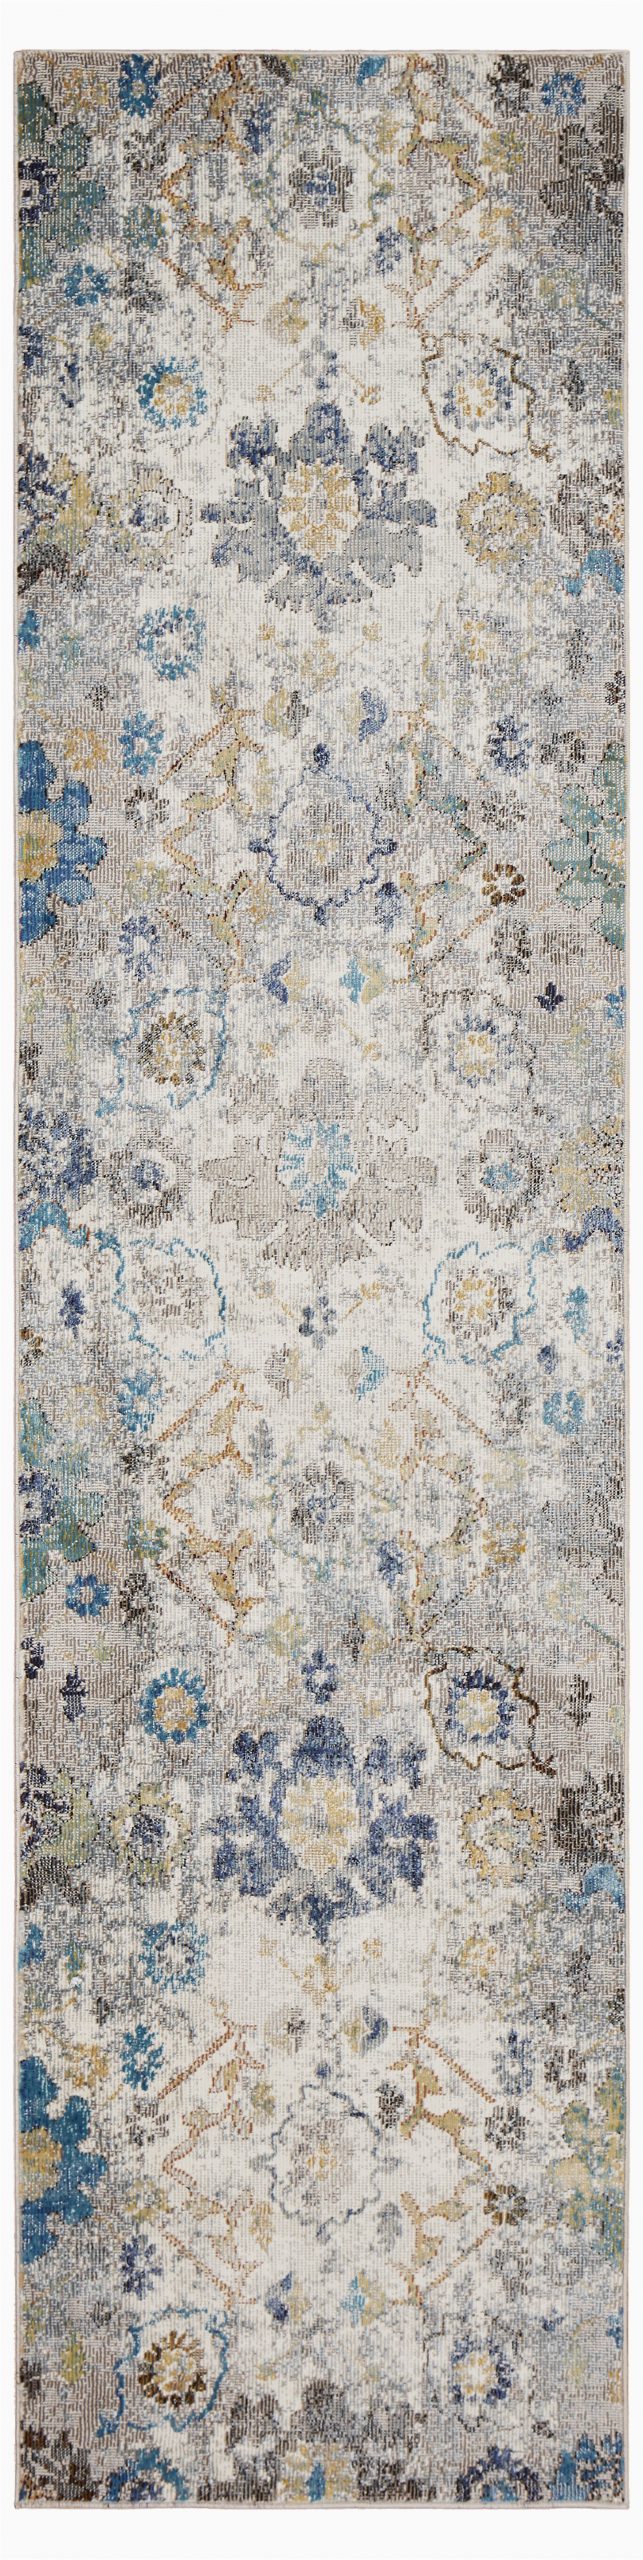 amory floral creamgrayblue area rug